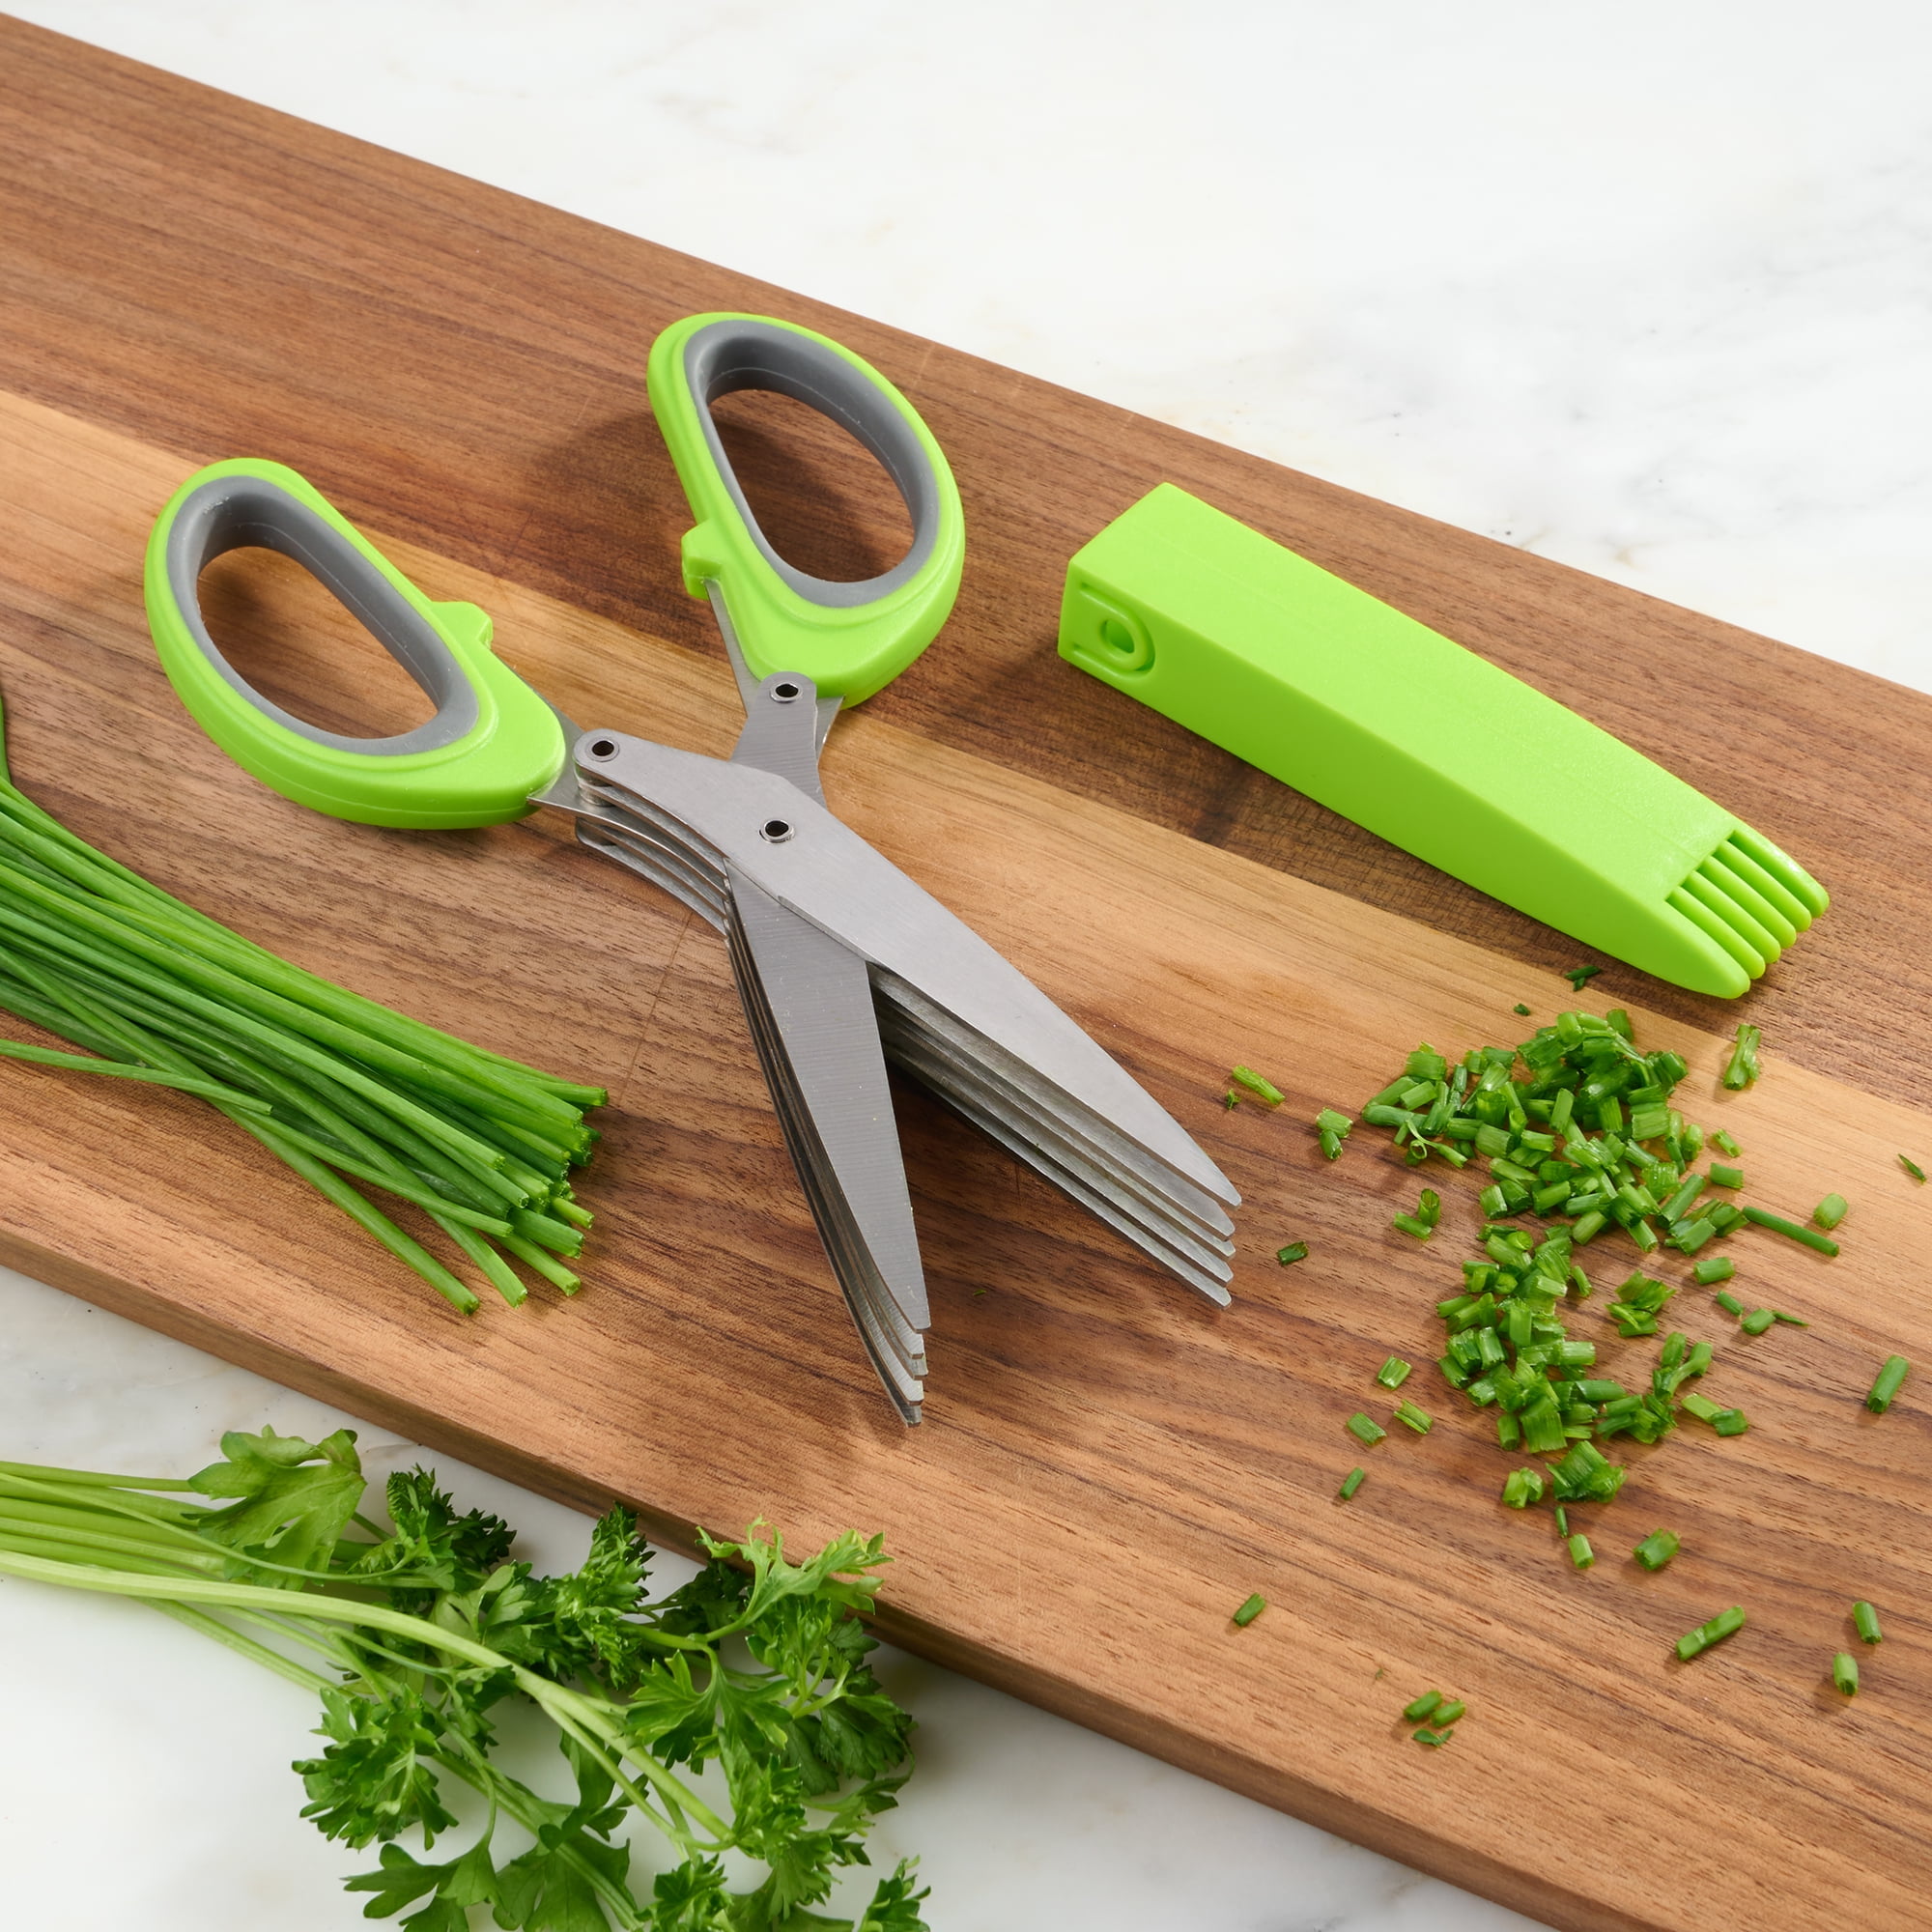 Mainstays 5 Blade Herb Kitchen Scissors with Blade Guard, Green